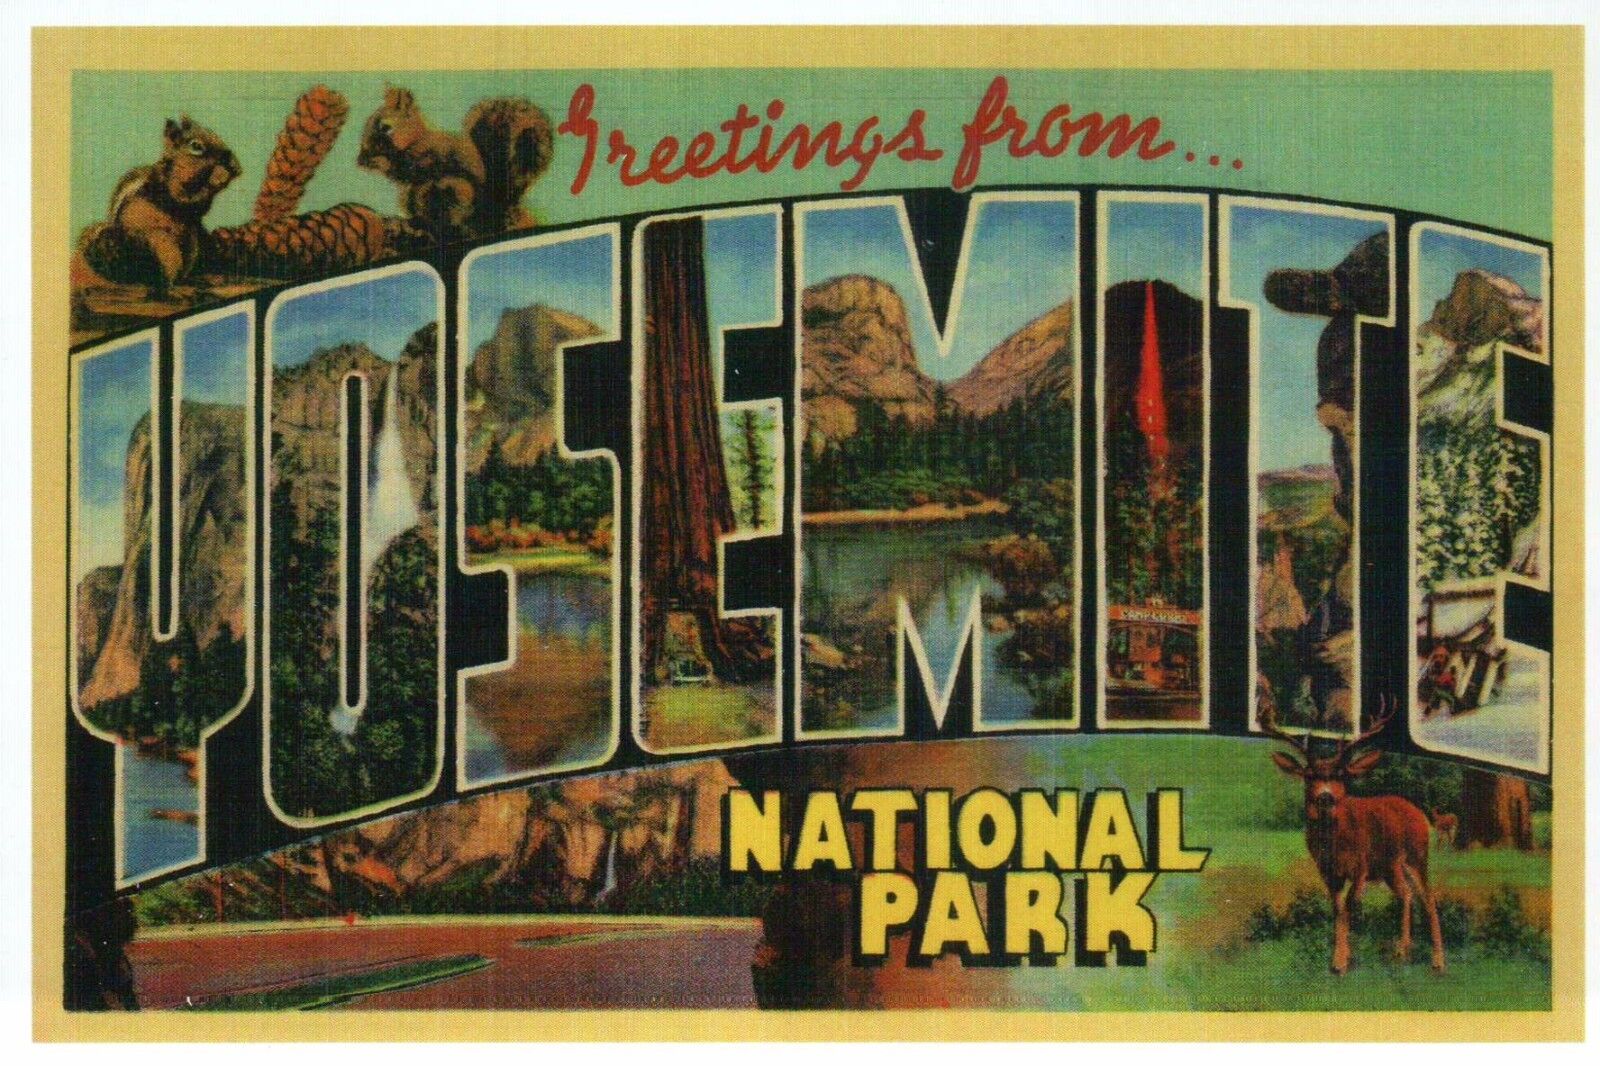 Greetings from Yosemite National Park, California - Modern Large Letter Postcard